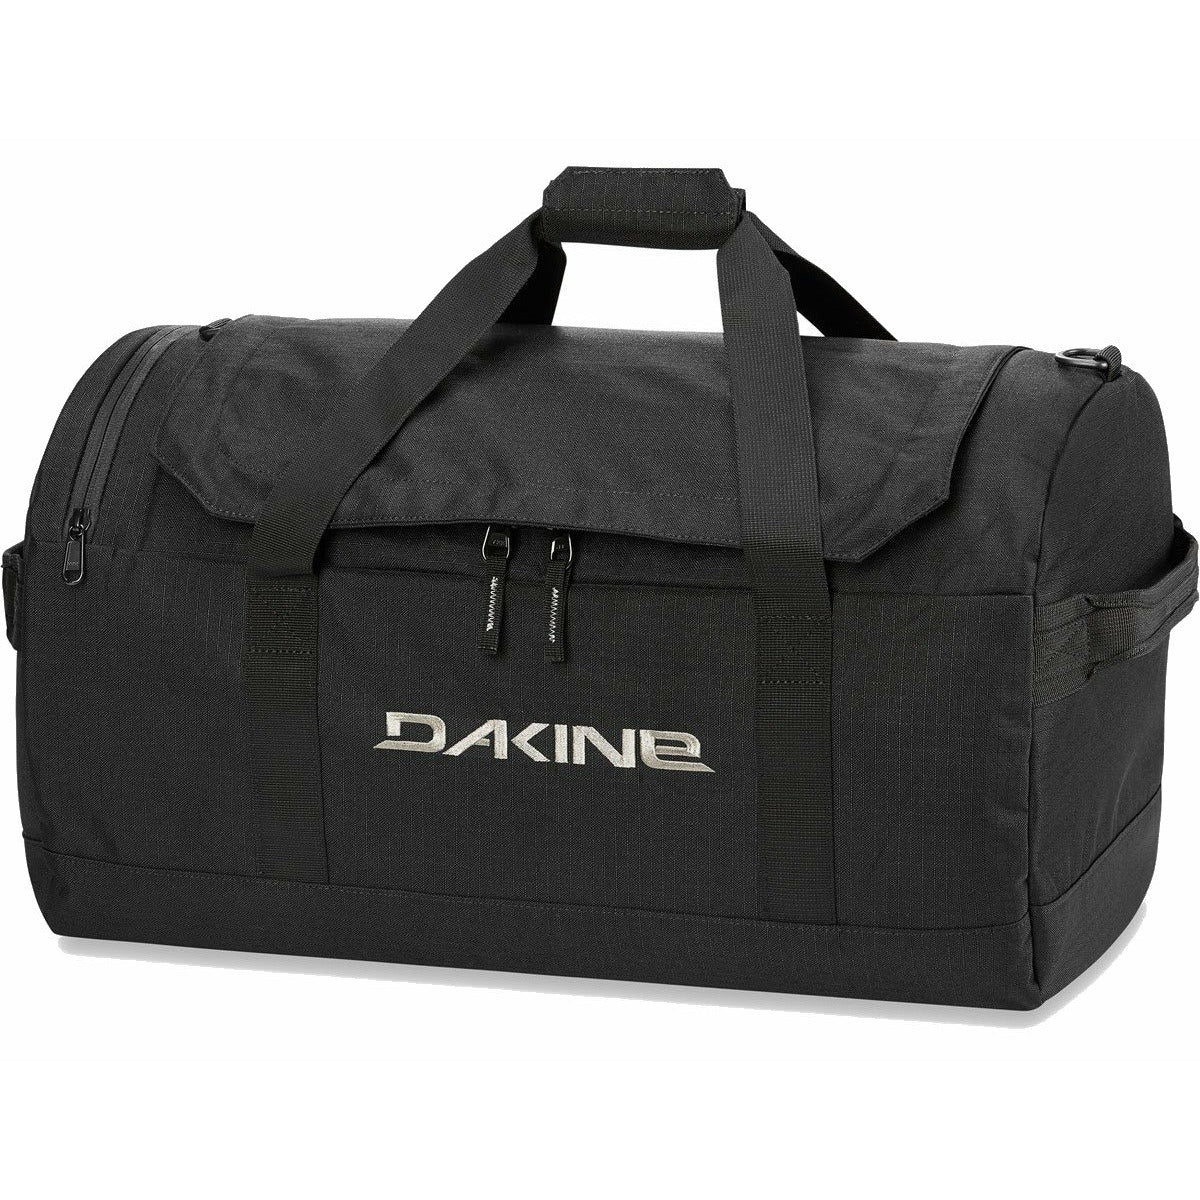 DAKINE EQ DUFFLE BAG 50L - BLACK